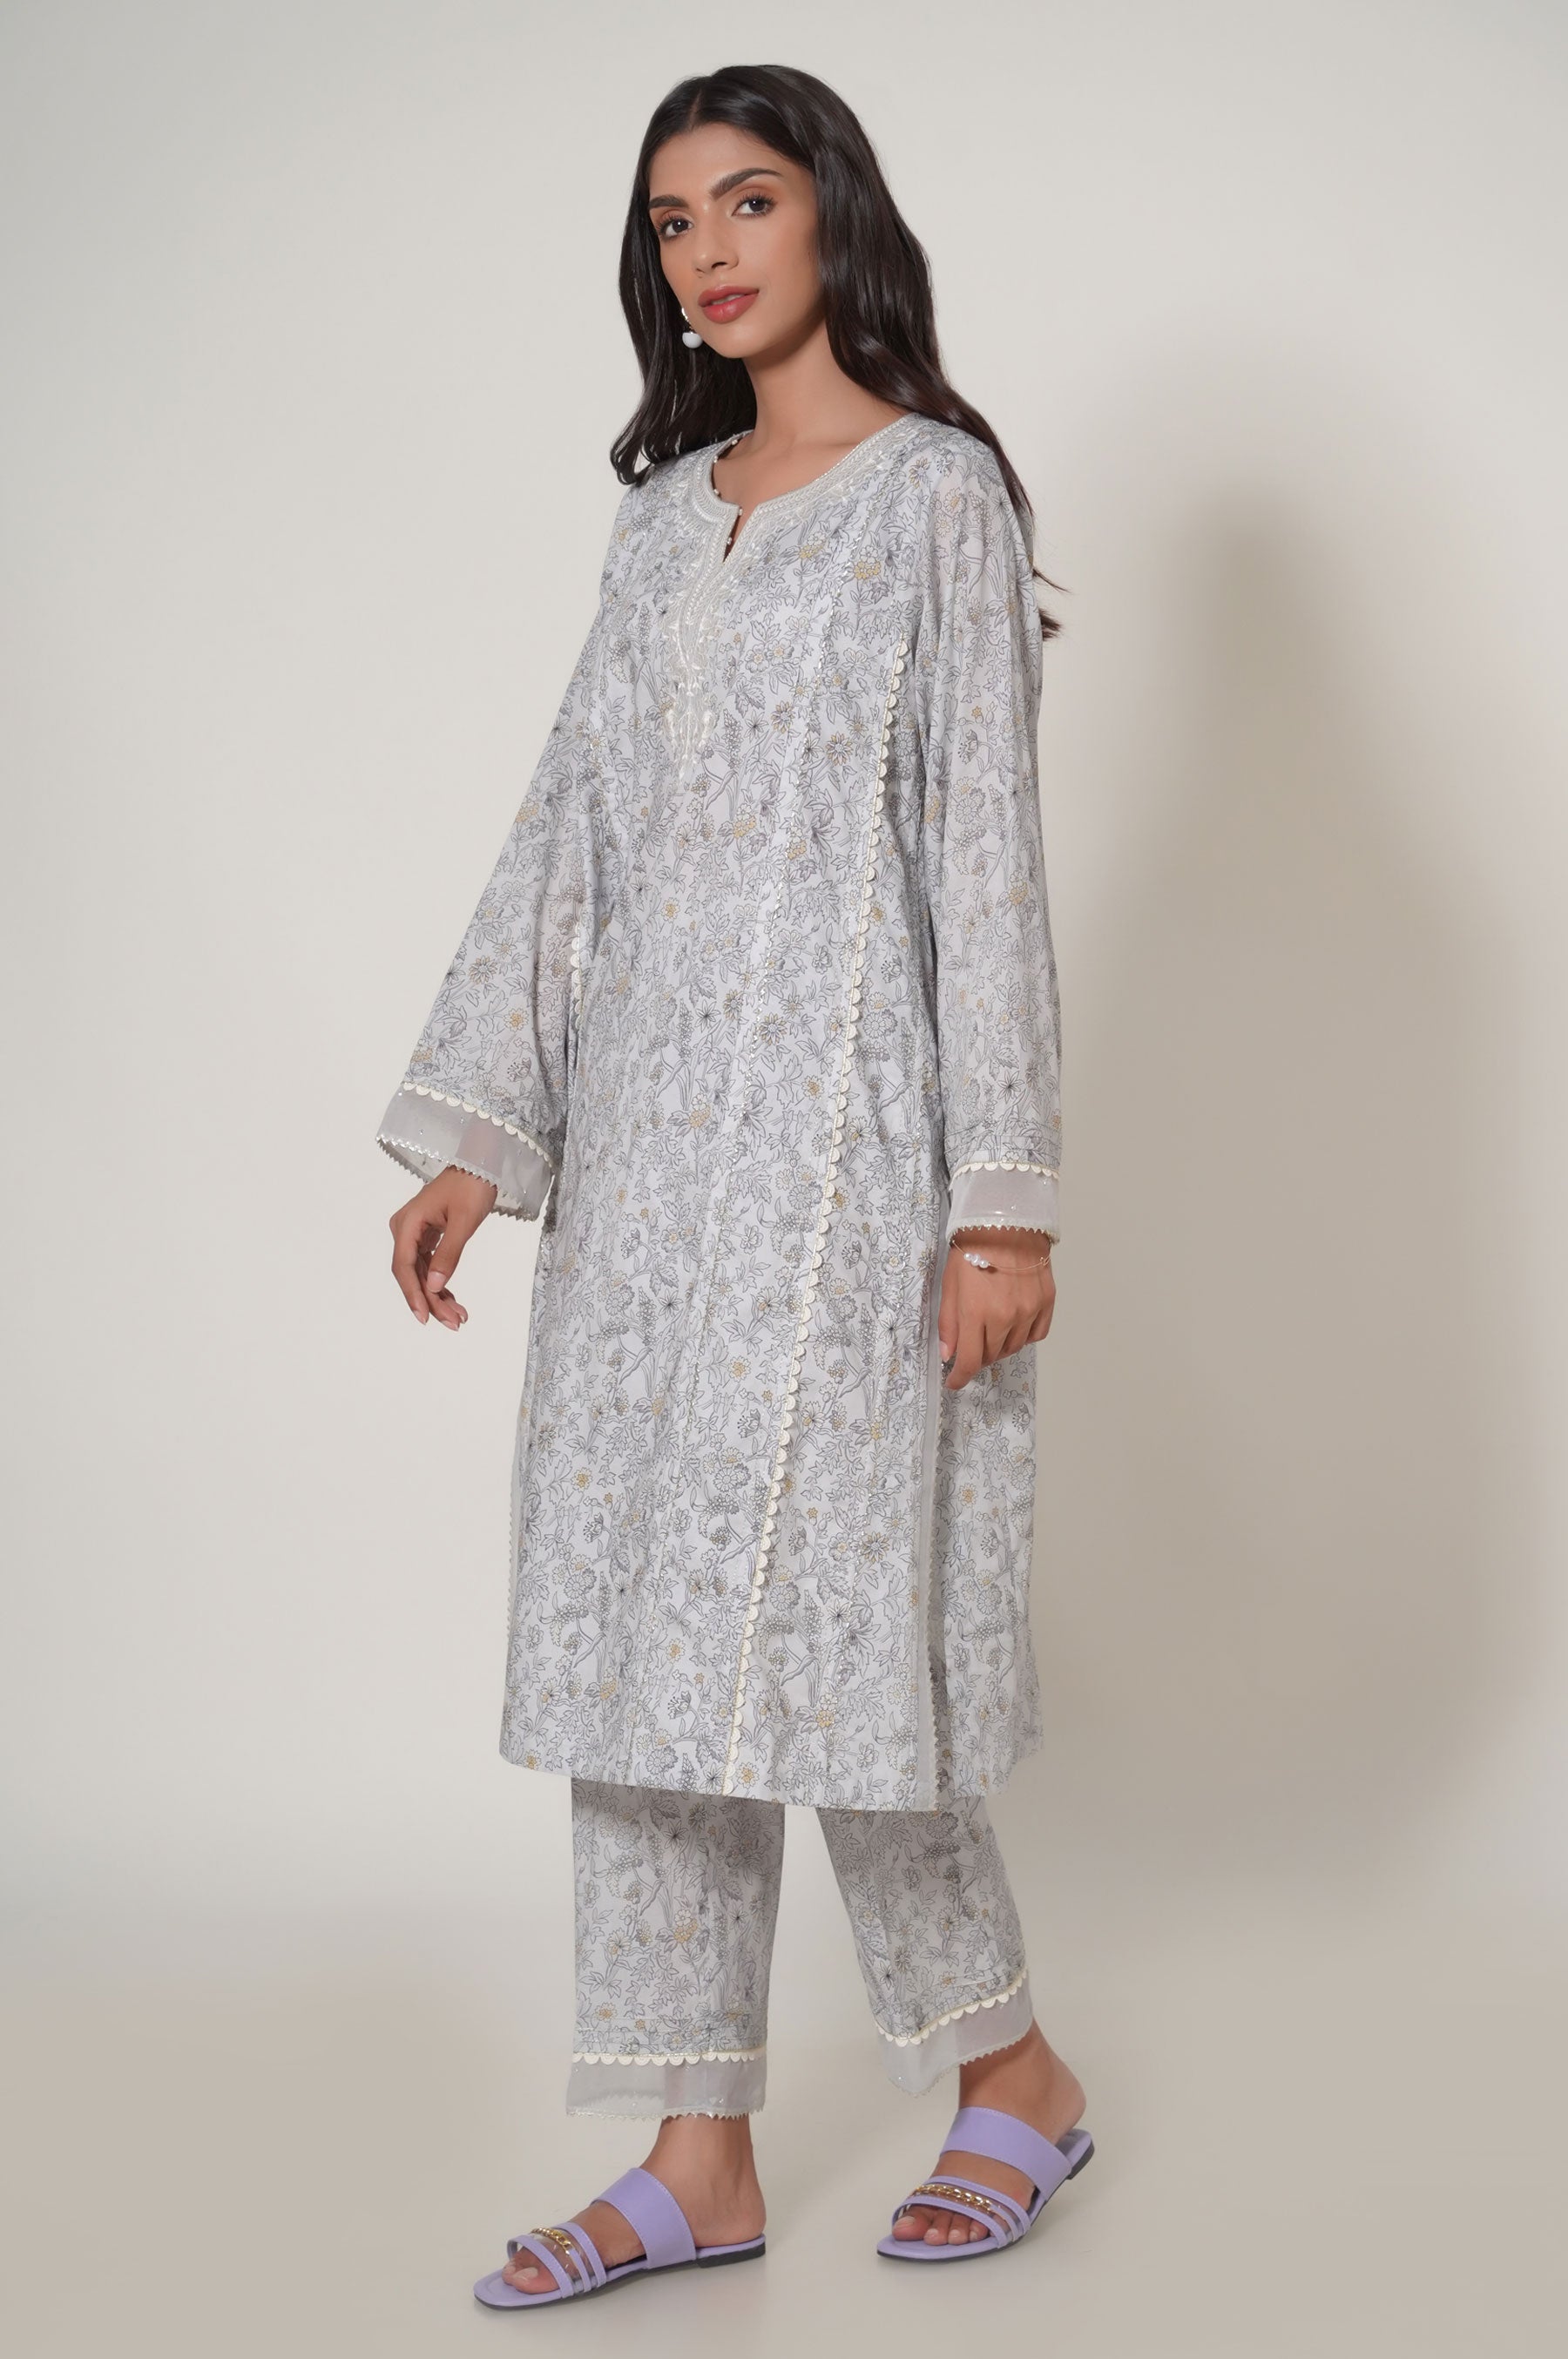 Zeen | Summer Collection 24 | 33622 - Khanumjan  Pakistani Clothes and Designer Dresses in UK, USA 